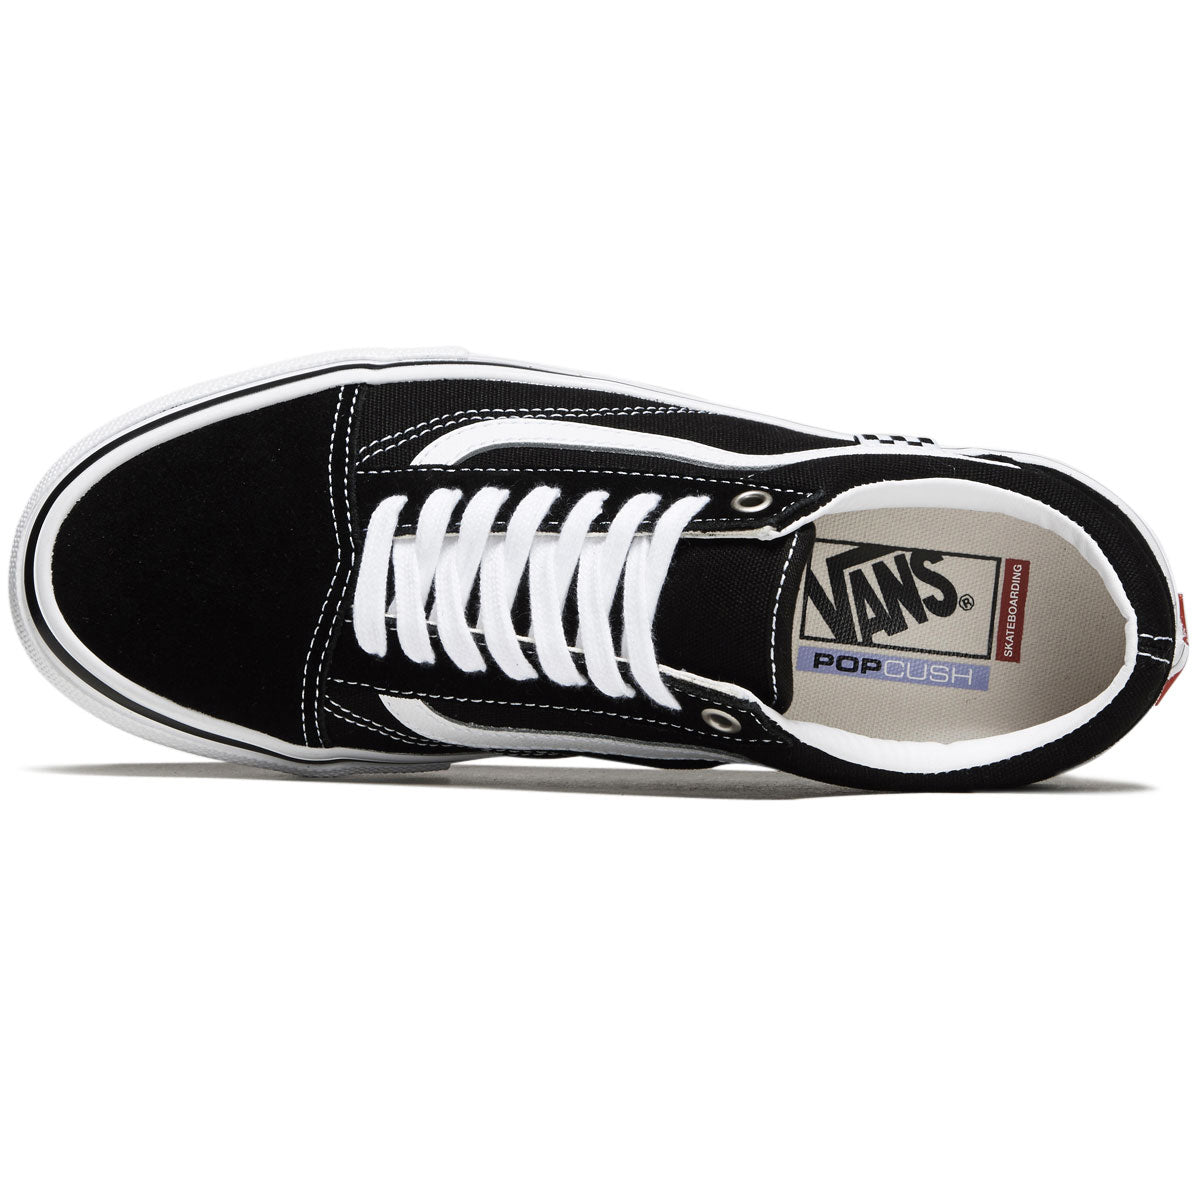 Vans Skate Old Skool Shoes - Black/White image 3